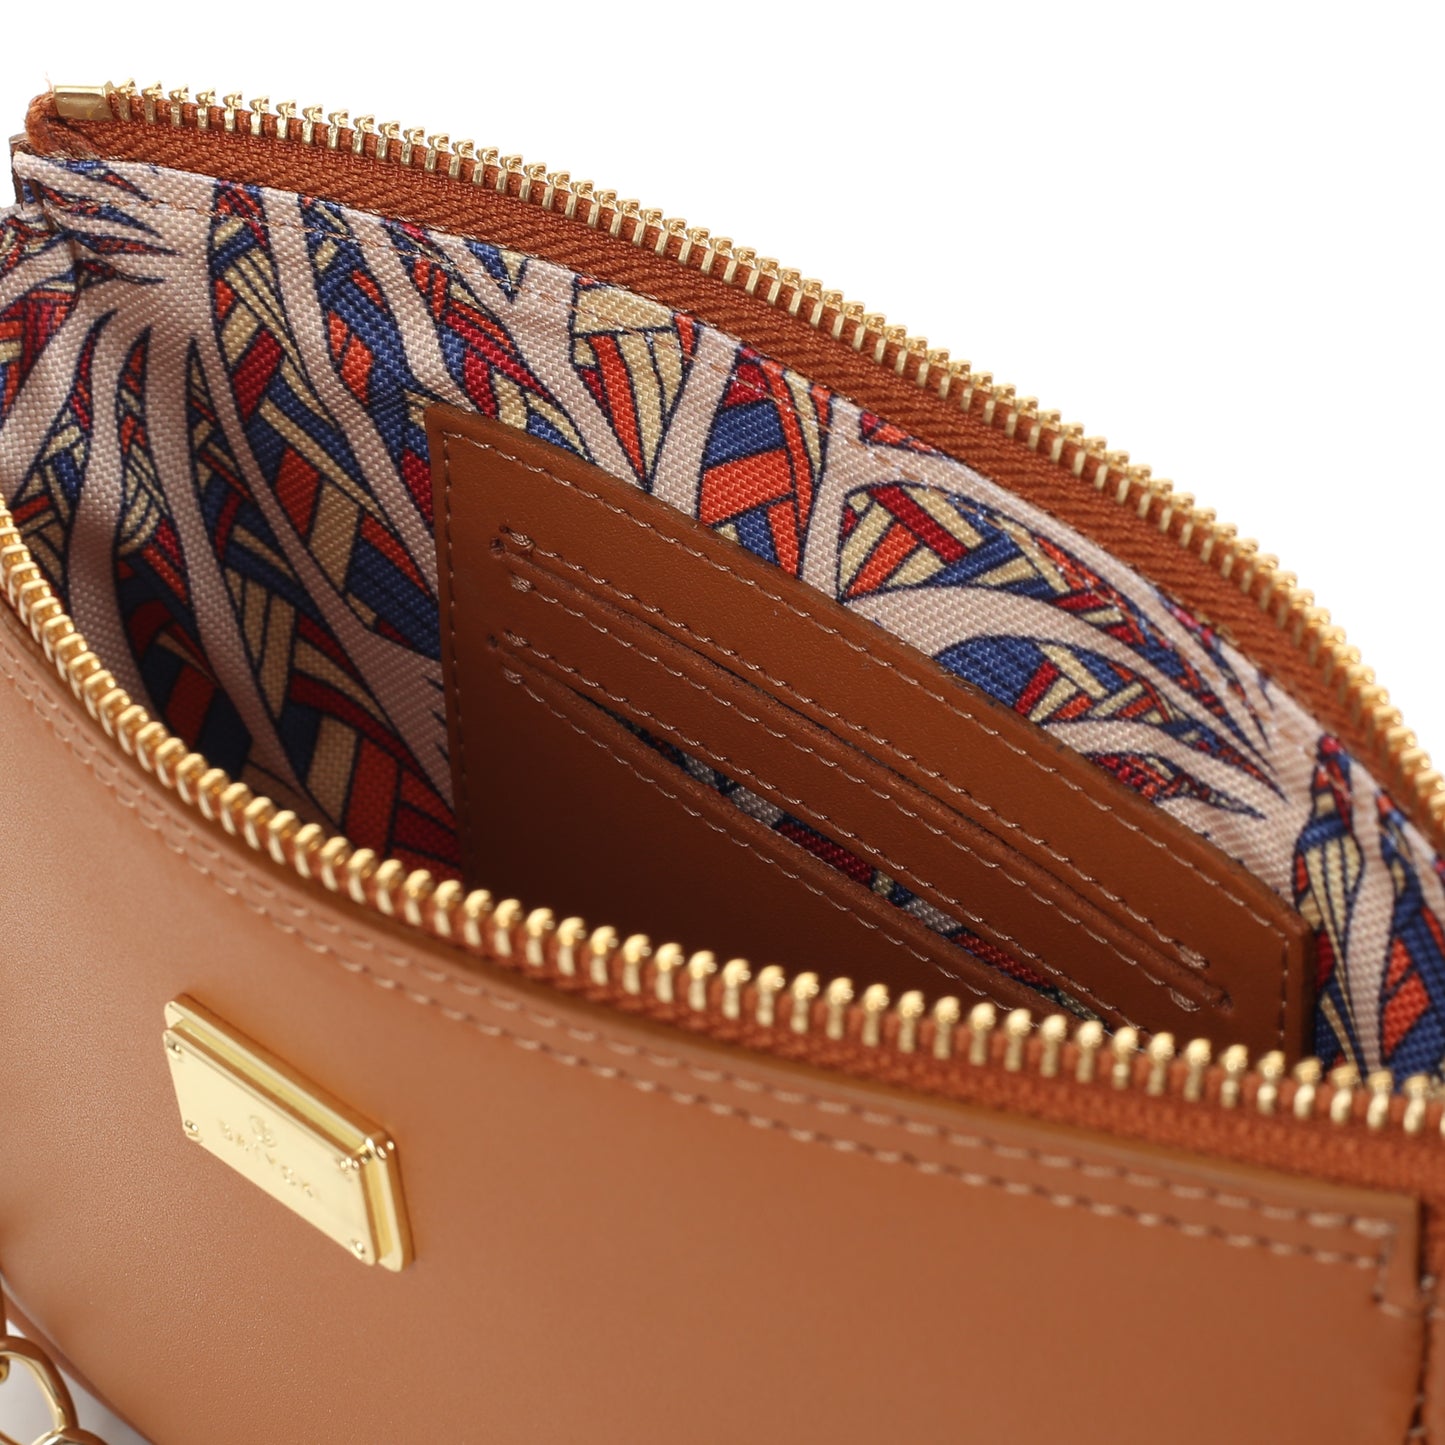 HARLEY MINI COGNAC women's leather handbag